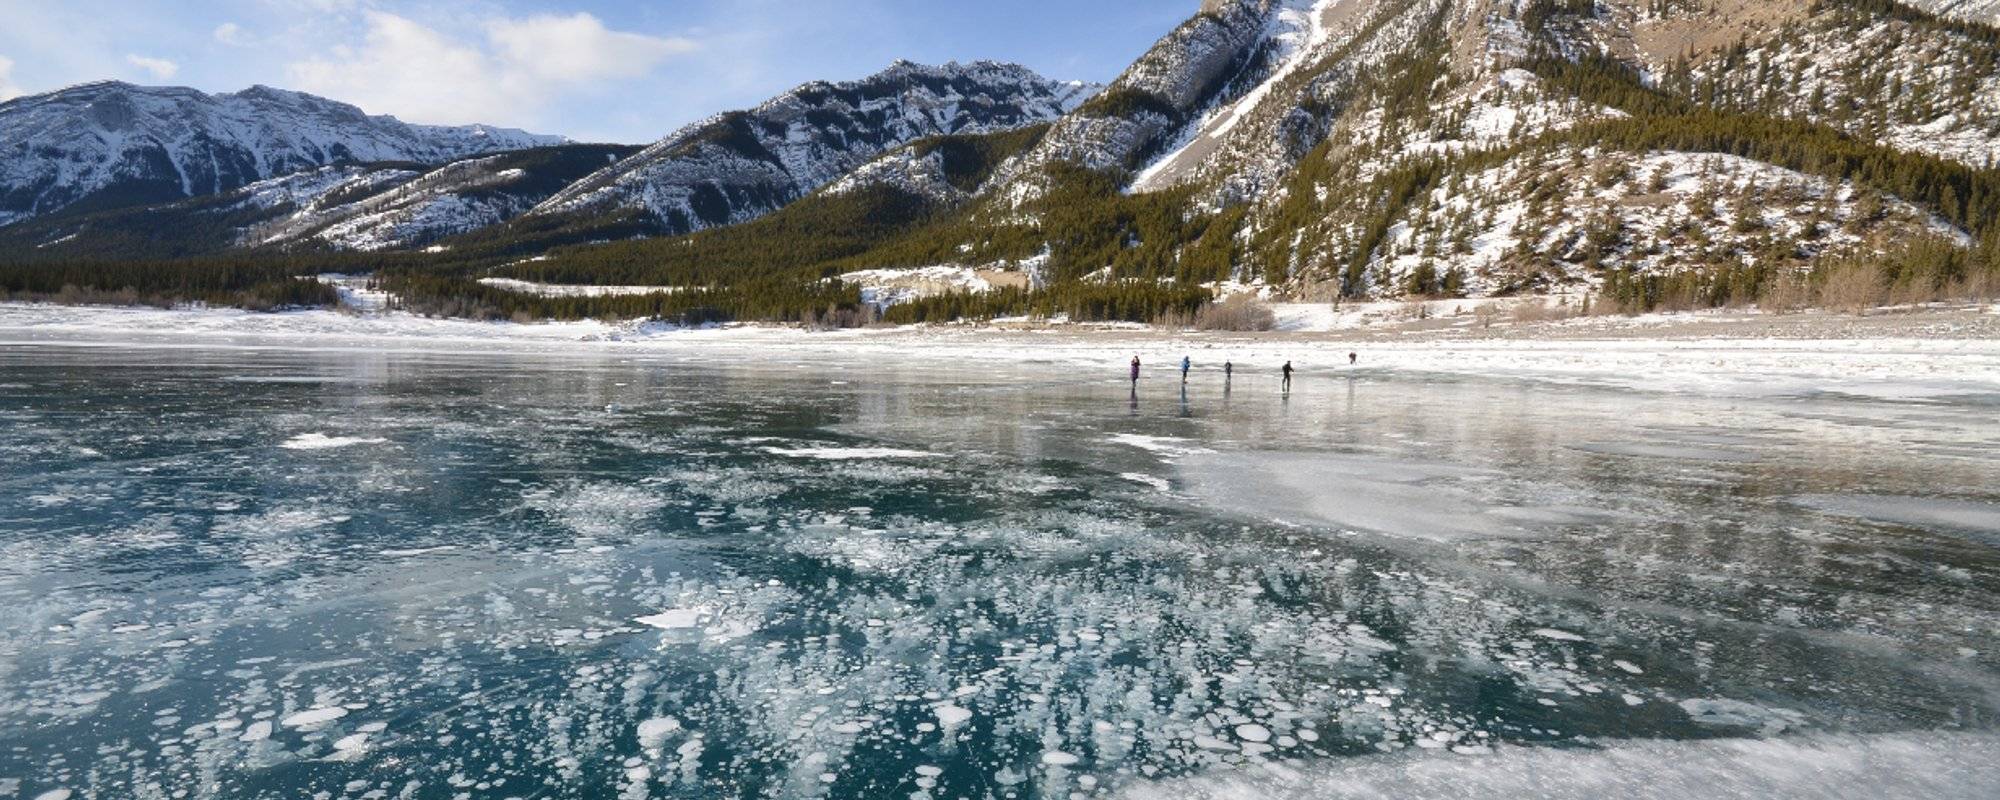 Abraham Lake methane bubbles - Frozen in time